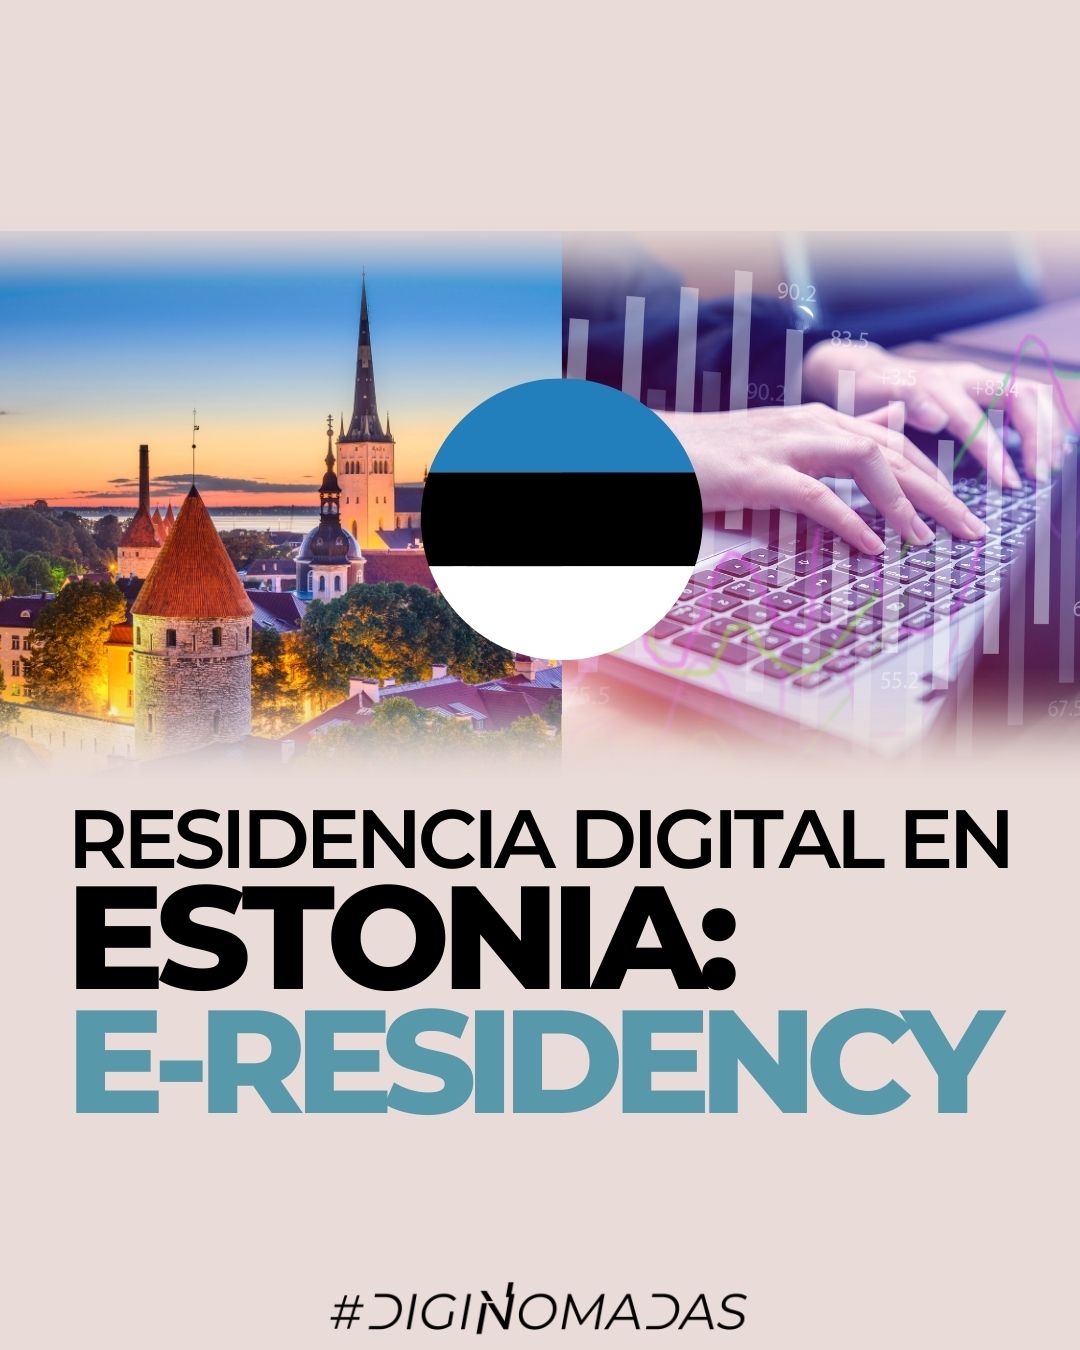 Residencia digital en Estonia